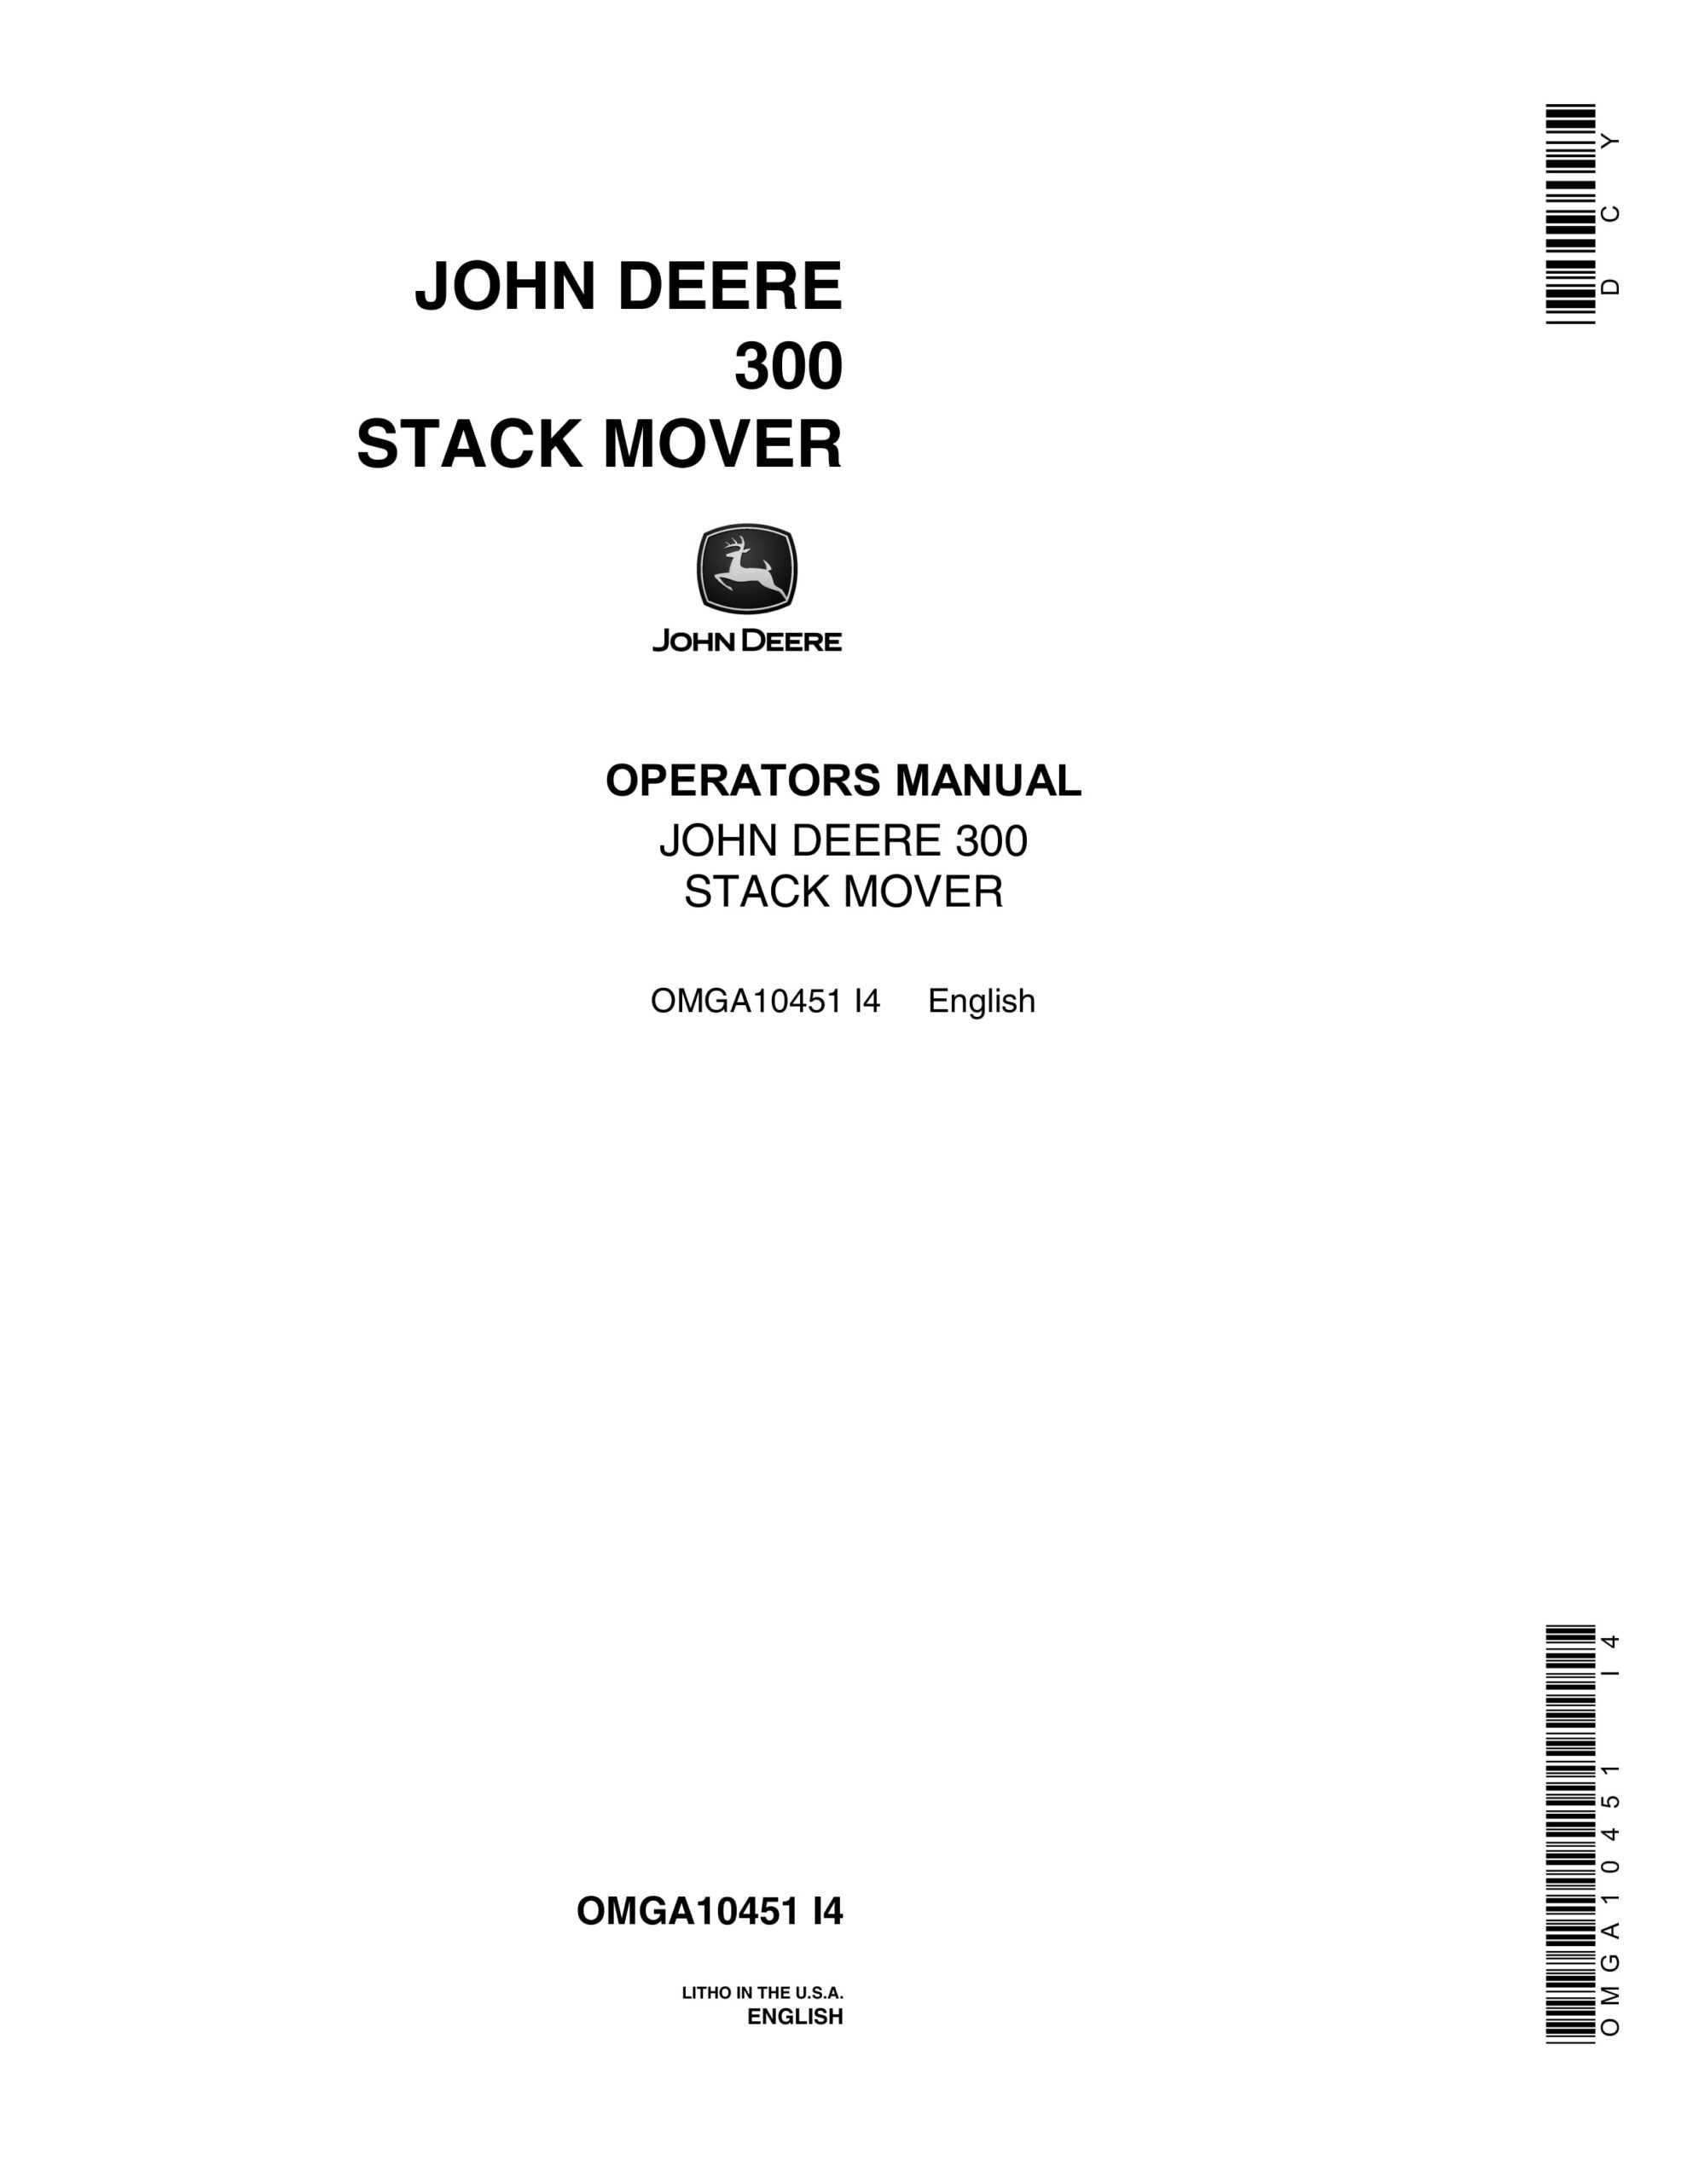 John Deere 300 STACK MOVER Operator Manual OMGA10451-1